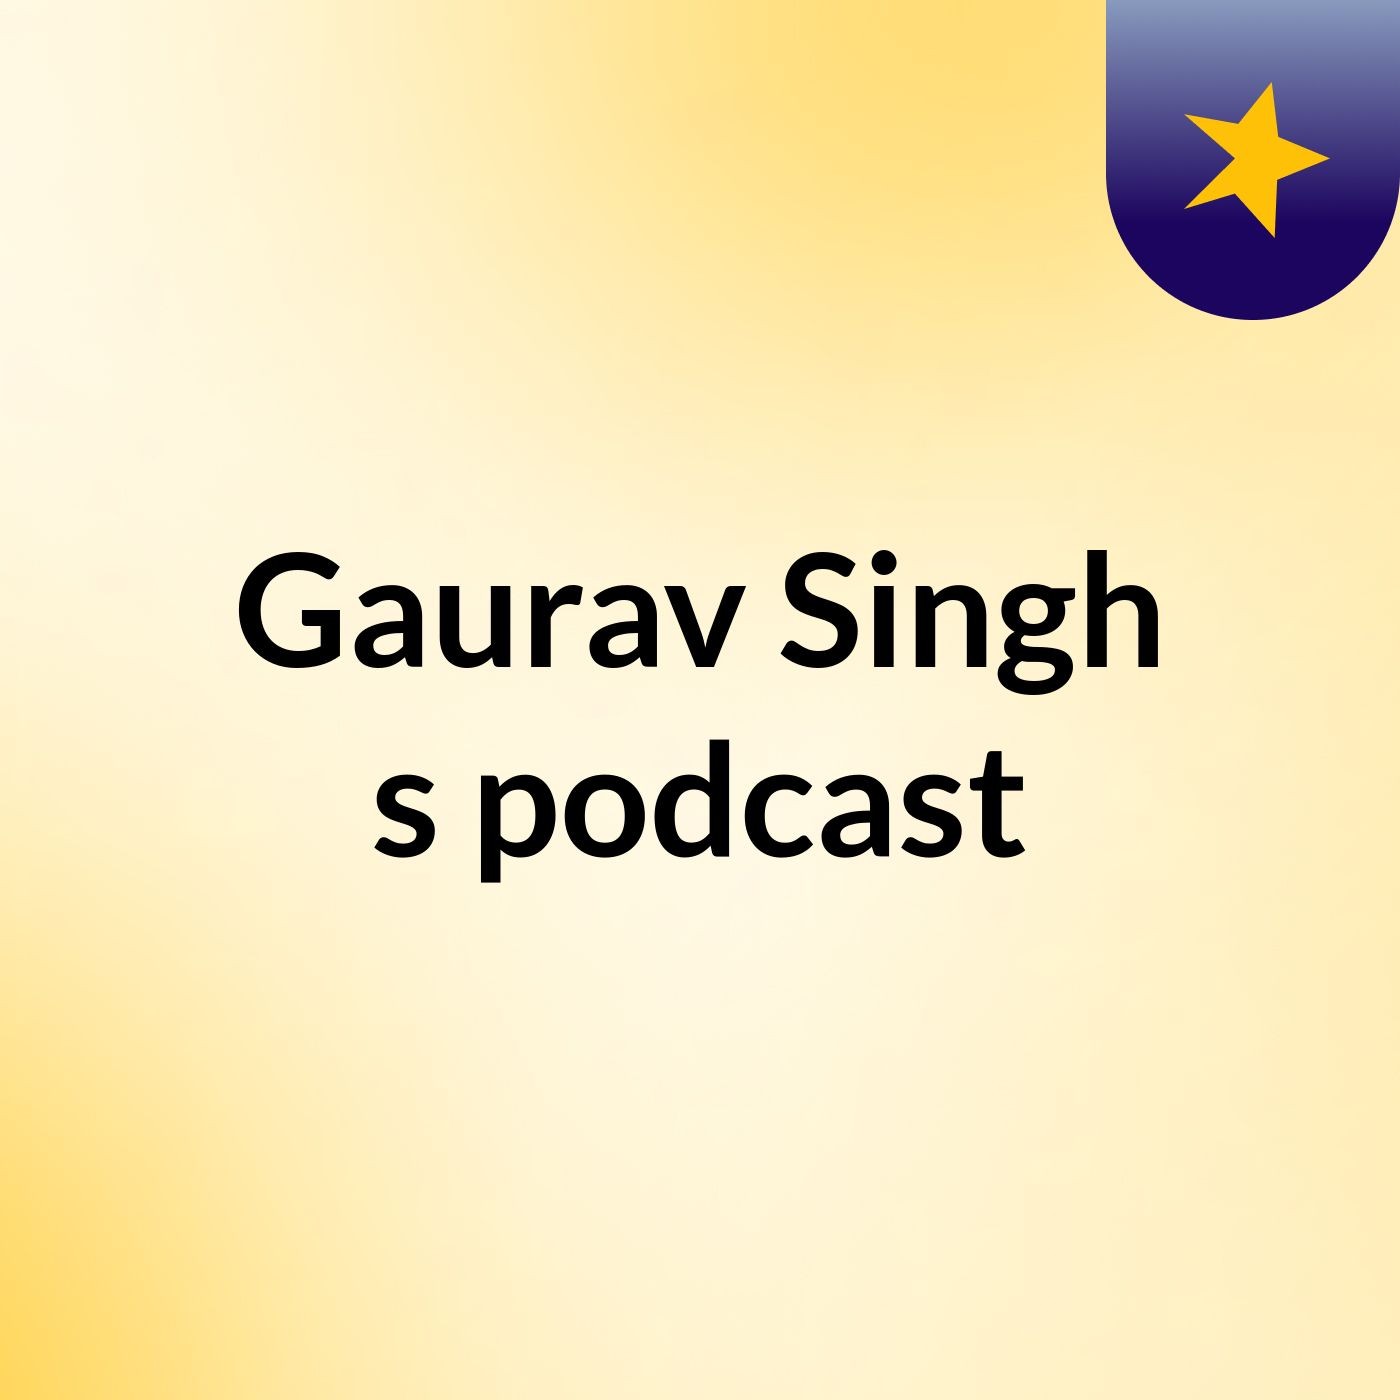 Gaurav Singh's podcast